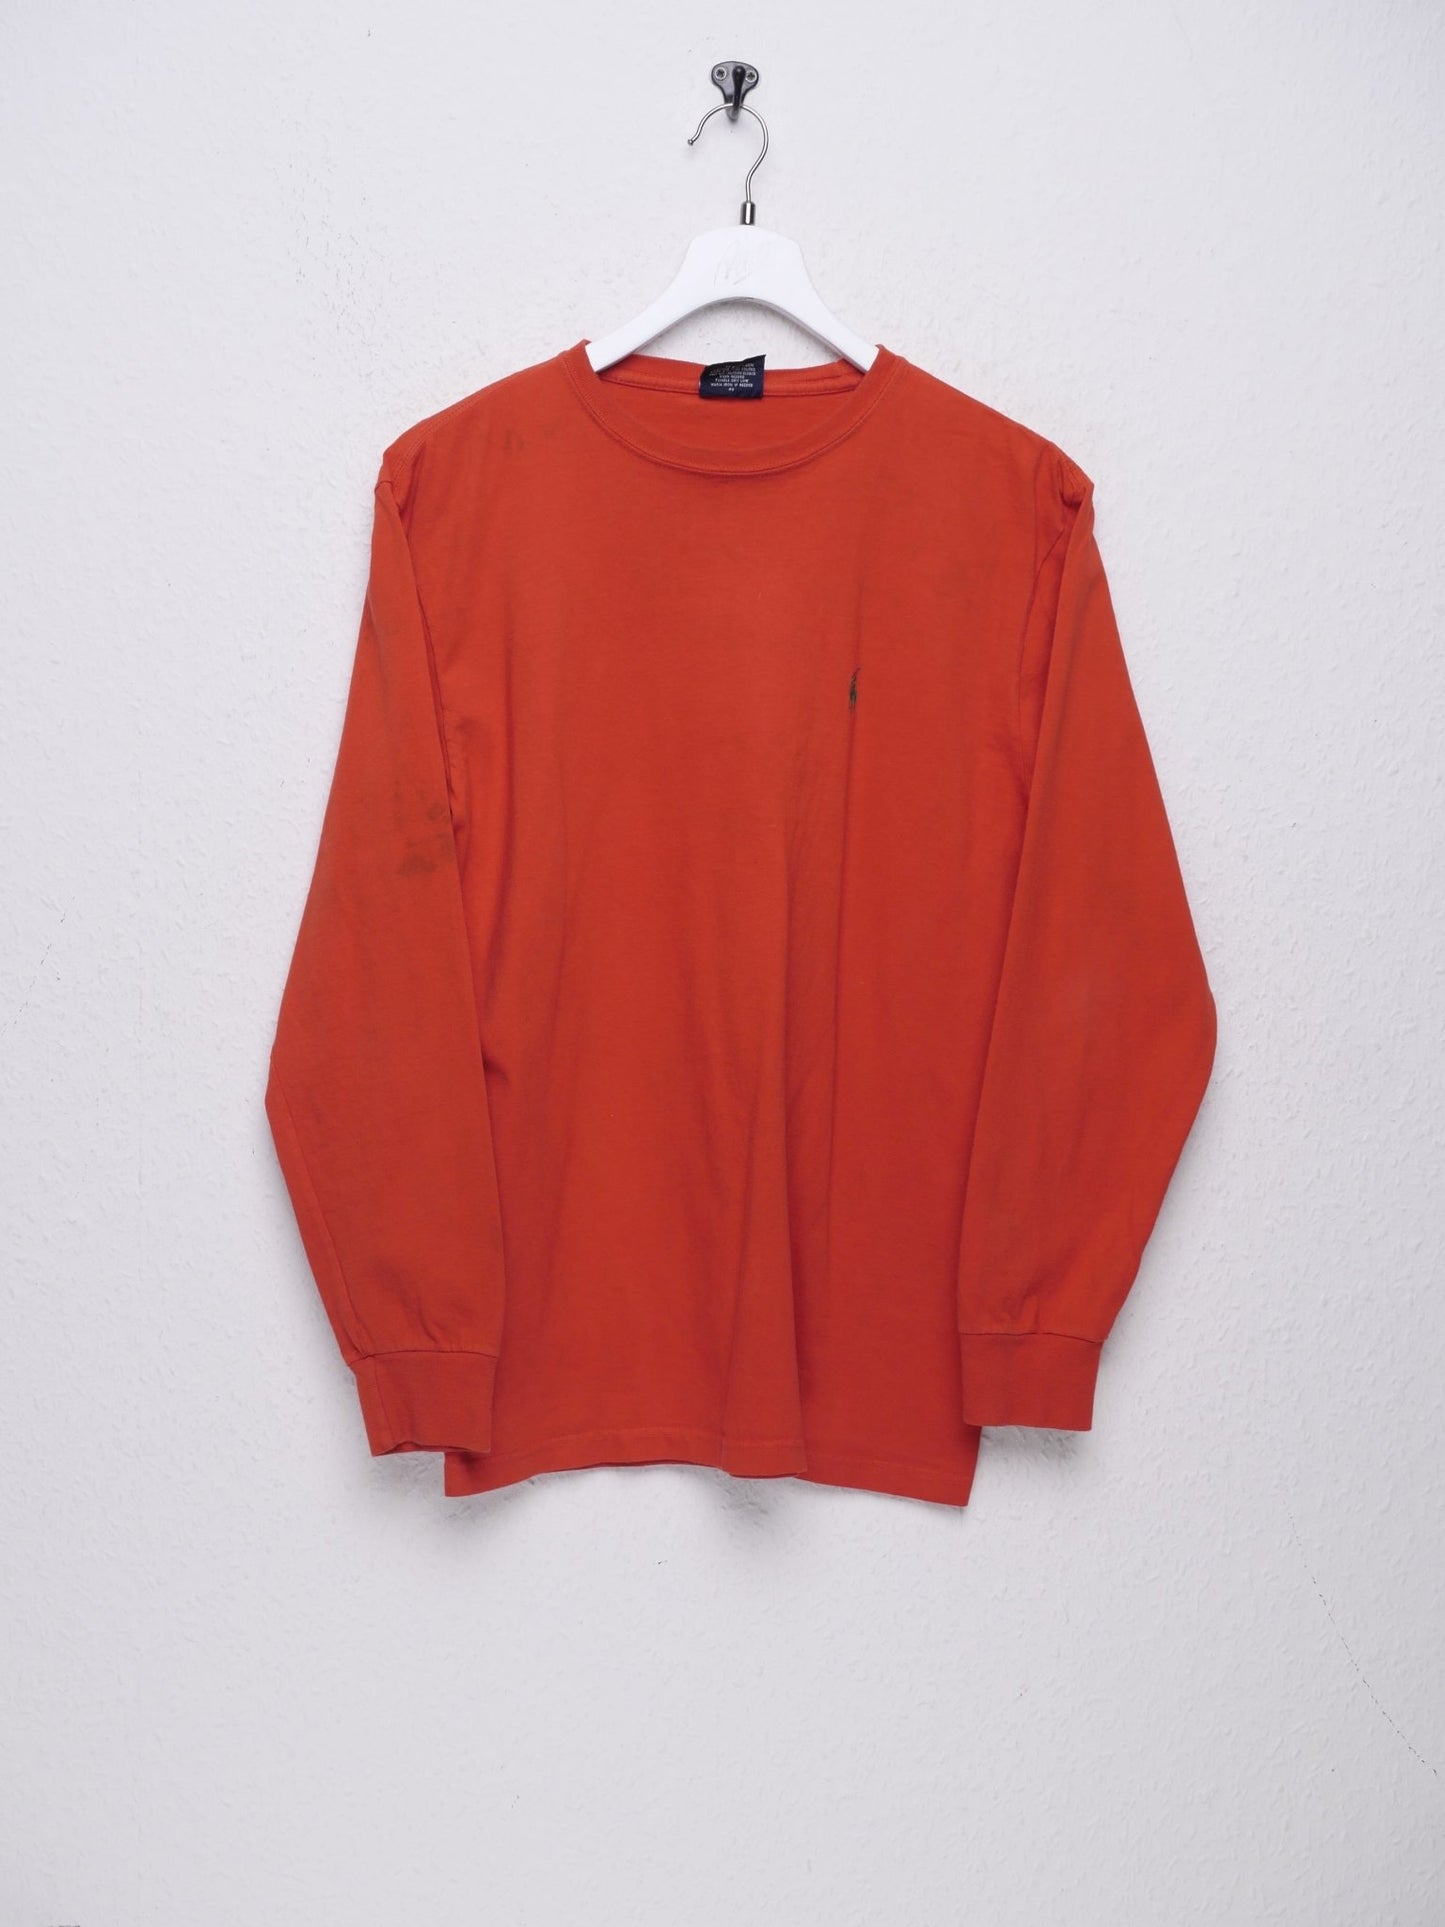 Polo Ralph Lauren embroidered Logo orange L/S Shirt - Peeces